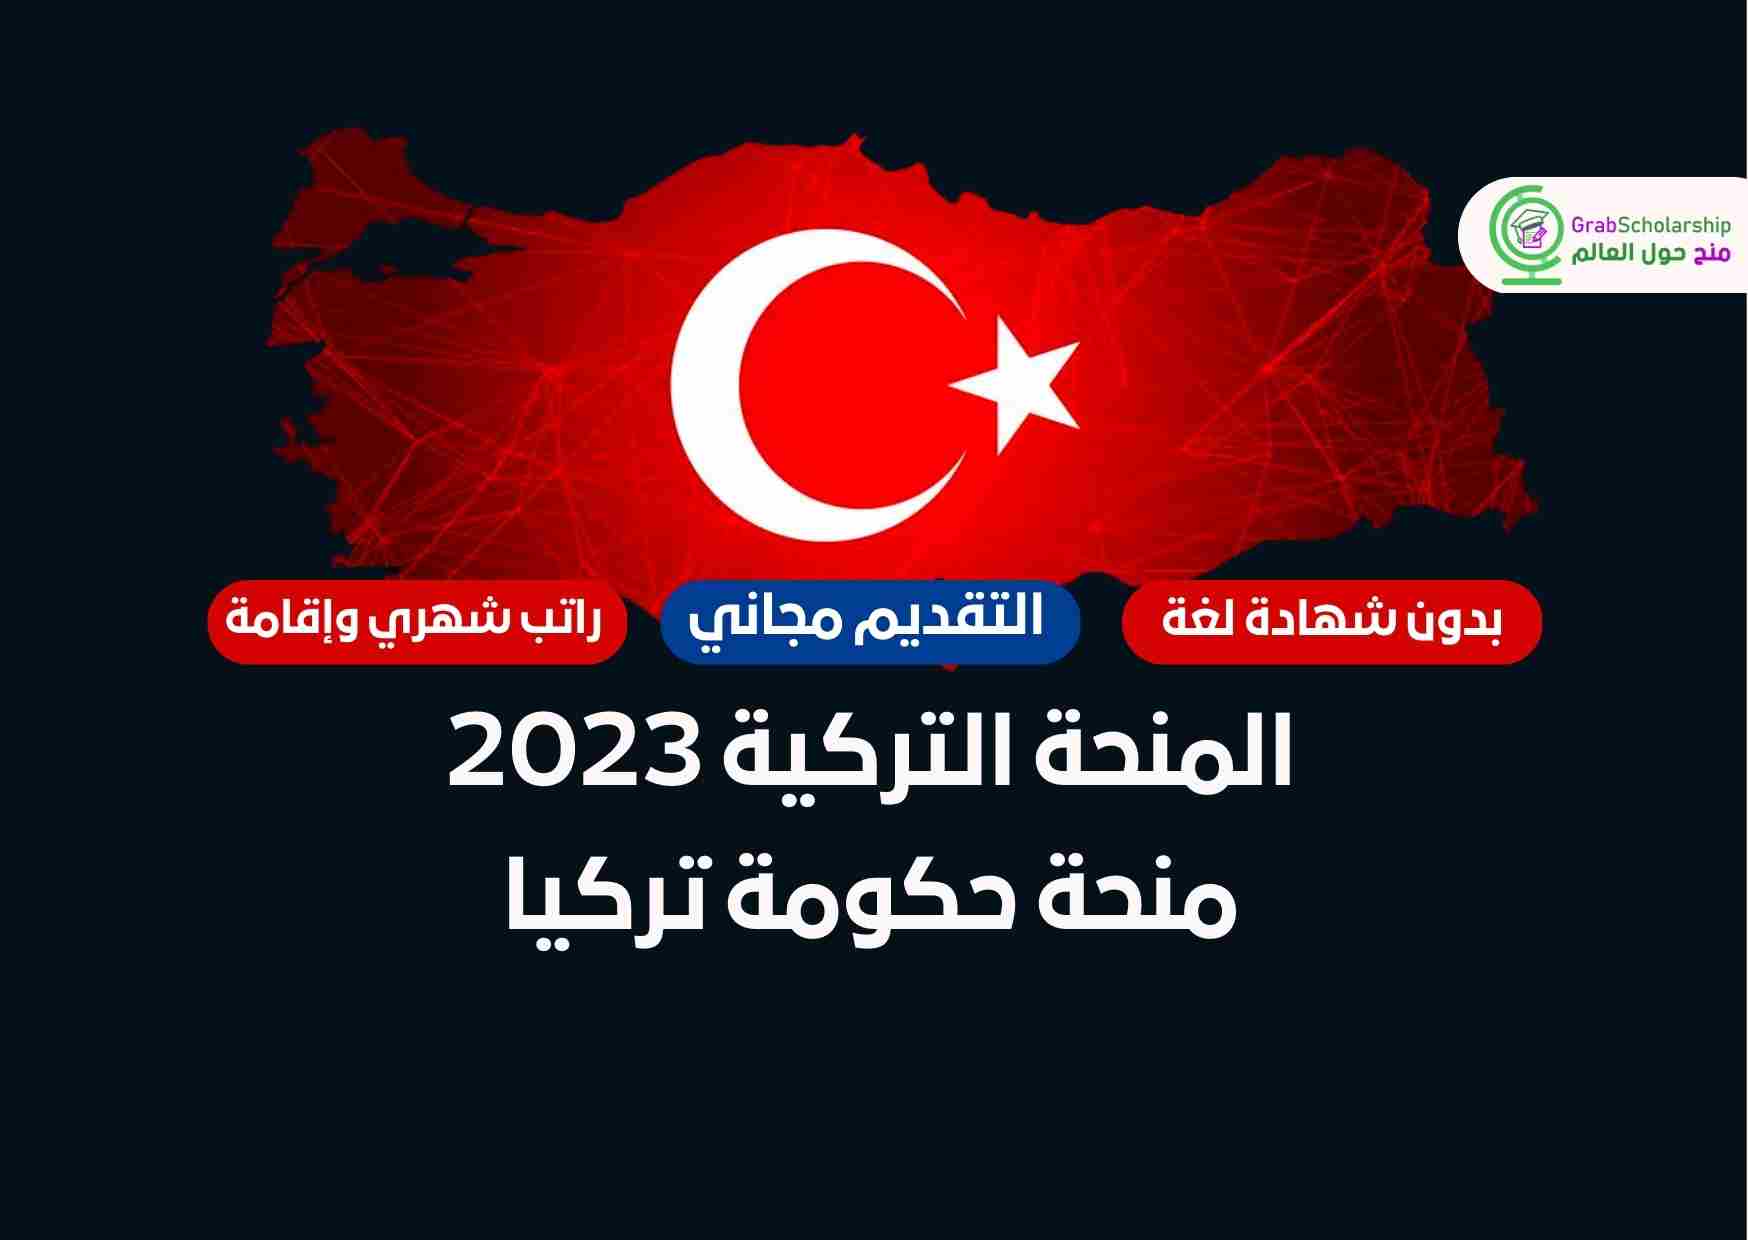 You are currently viewing المنحة التركية 2023 | منحة حكومة تركيا | التسجيل مجاني